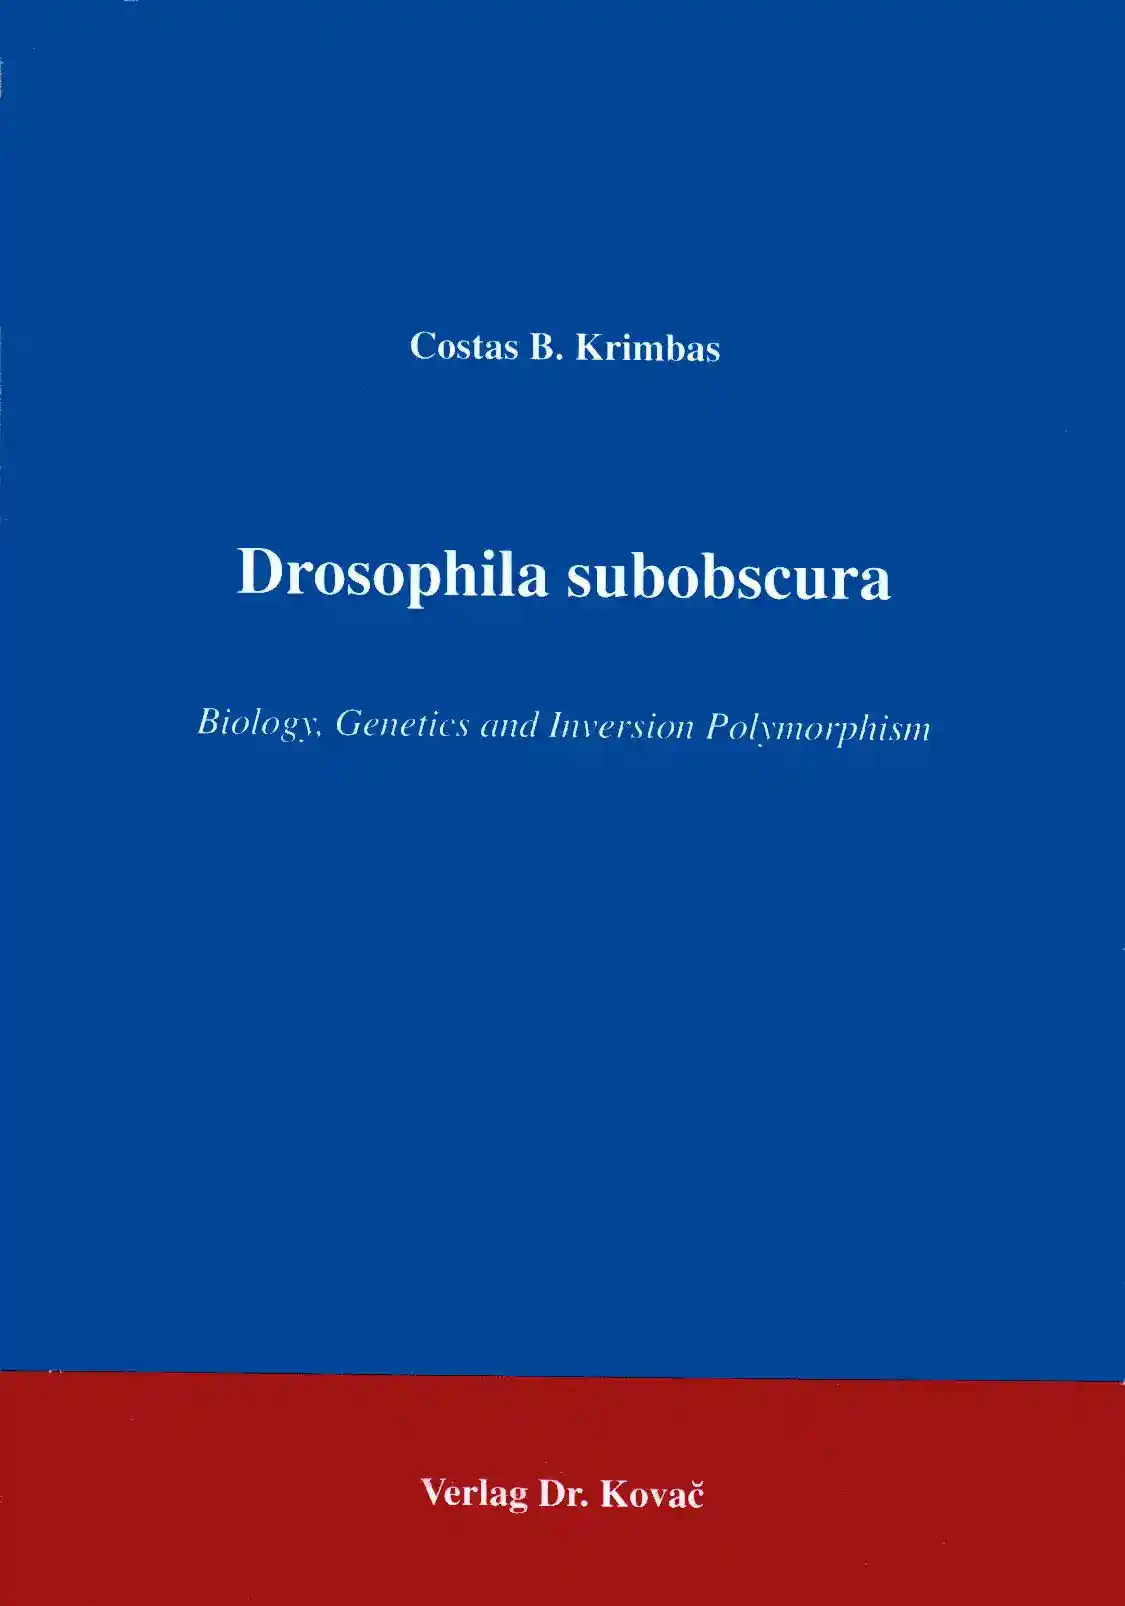 : Drosophila suboscura